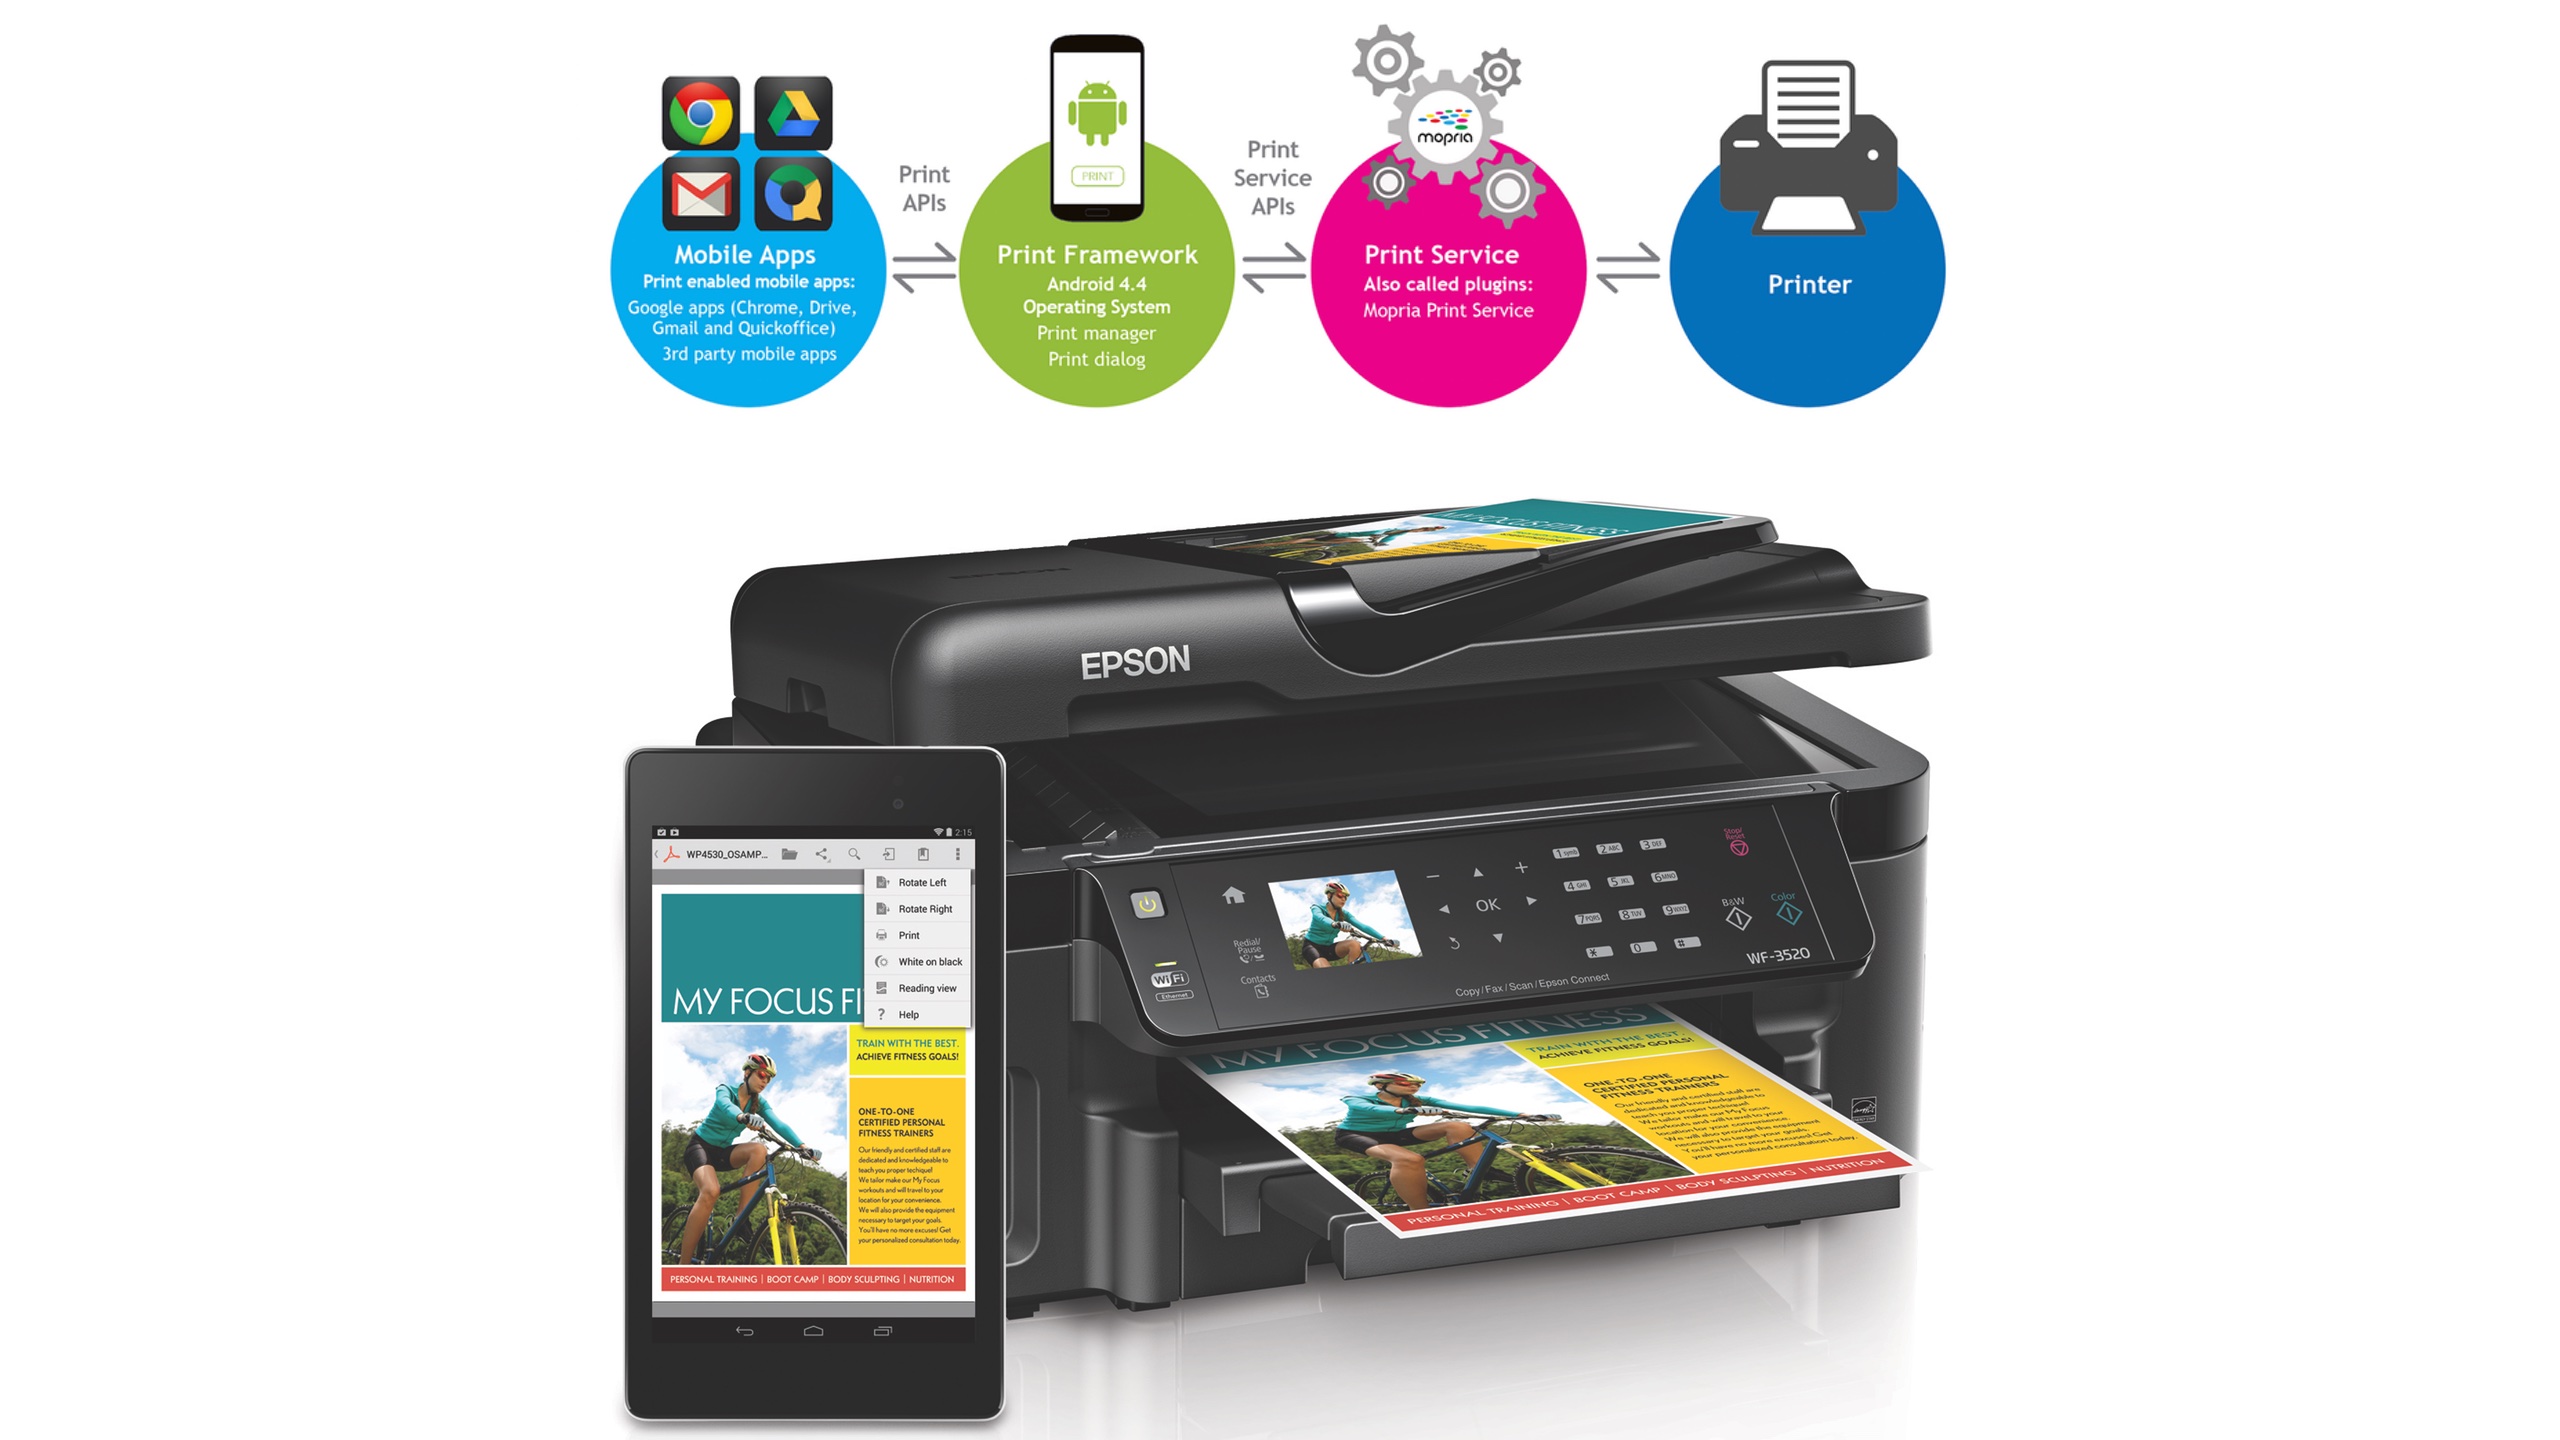 Epson 820 printer manual